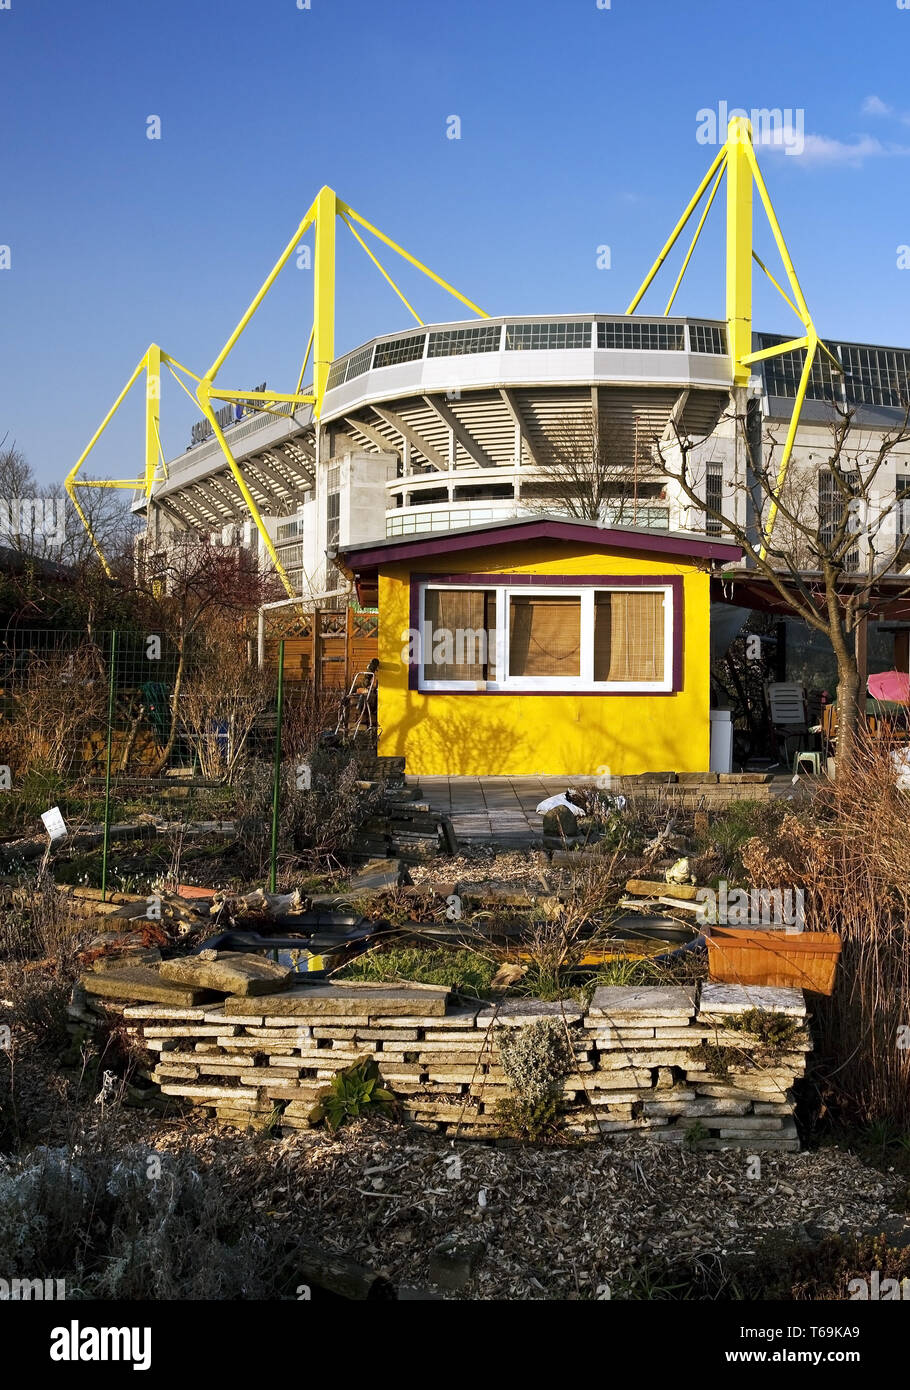 Spécial jardin en face de stade de football Signal Iduna Park de BVB, Dortmund, Allemagne Banque D'Images